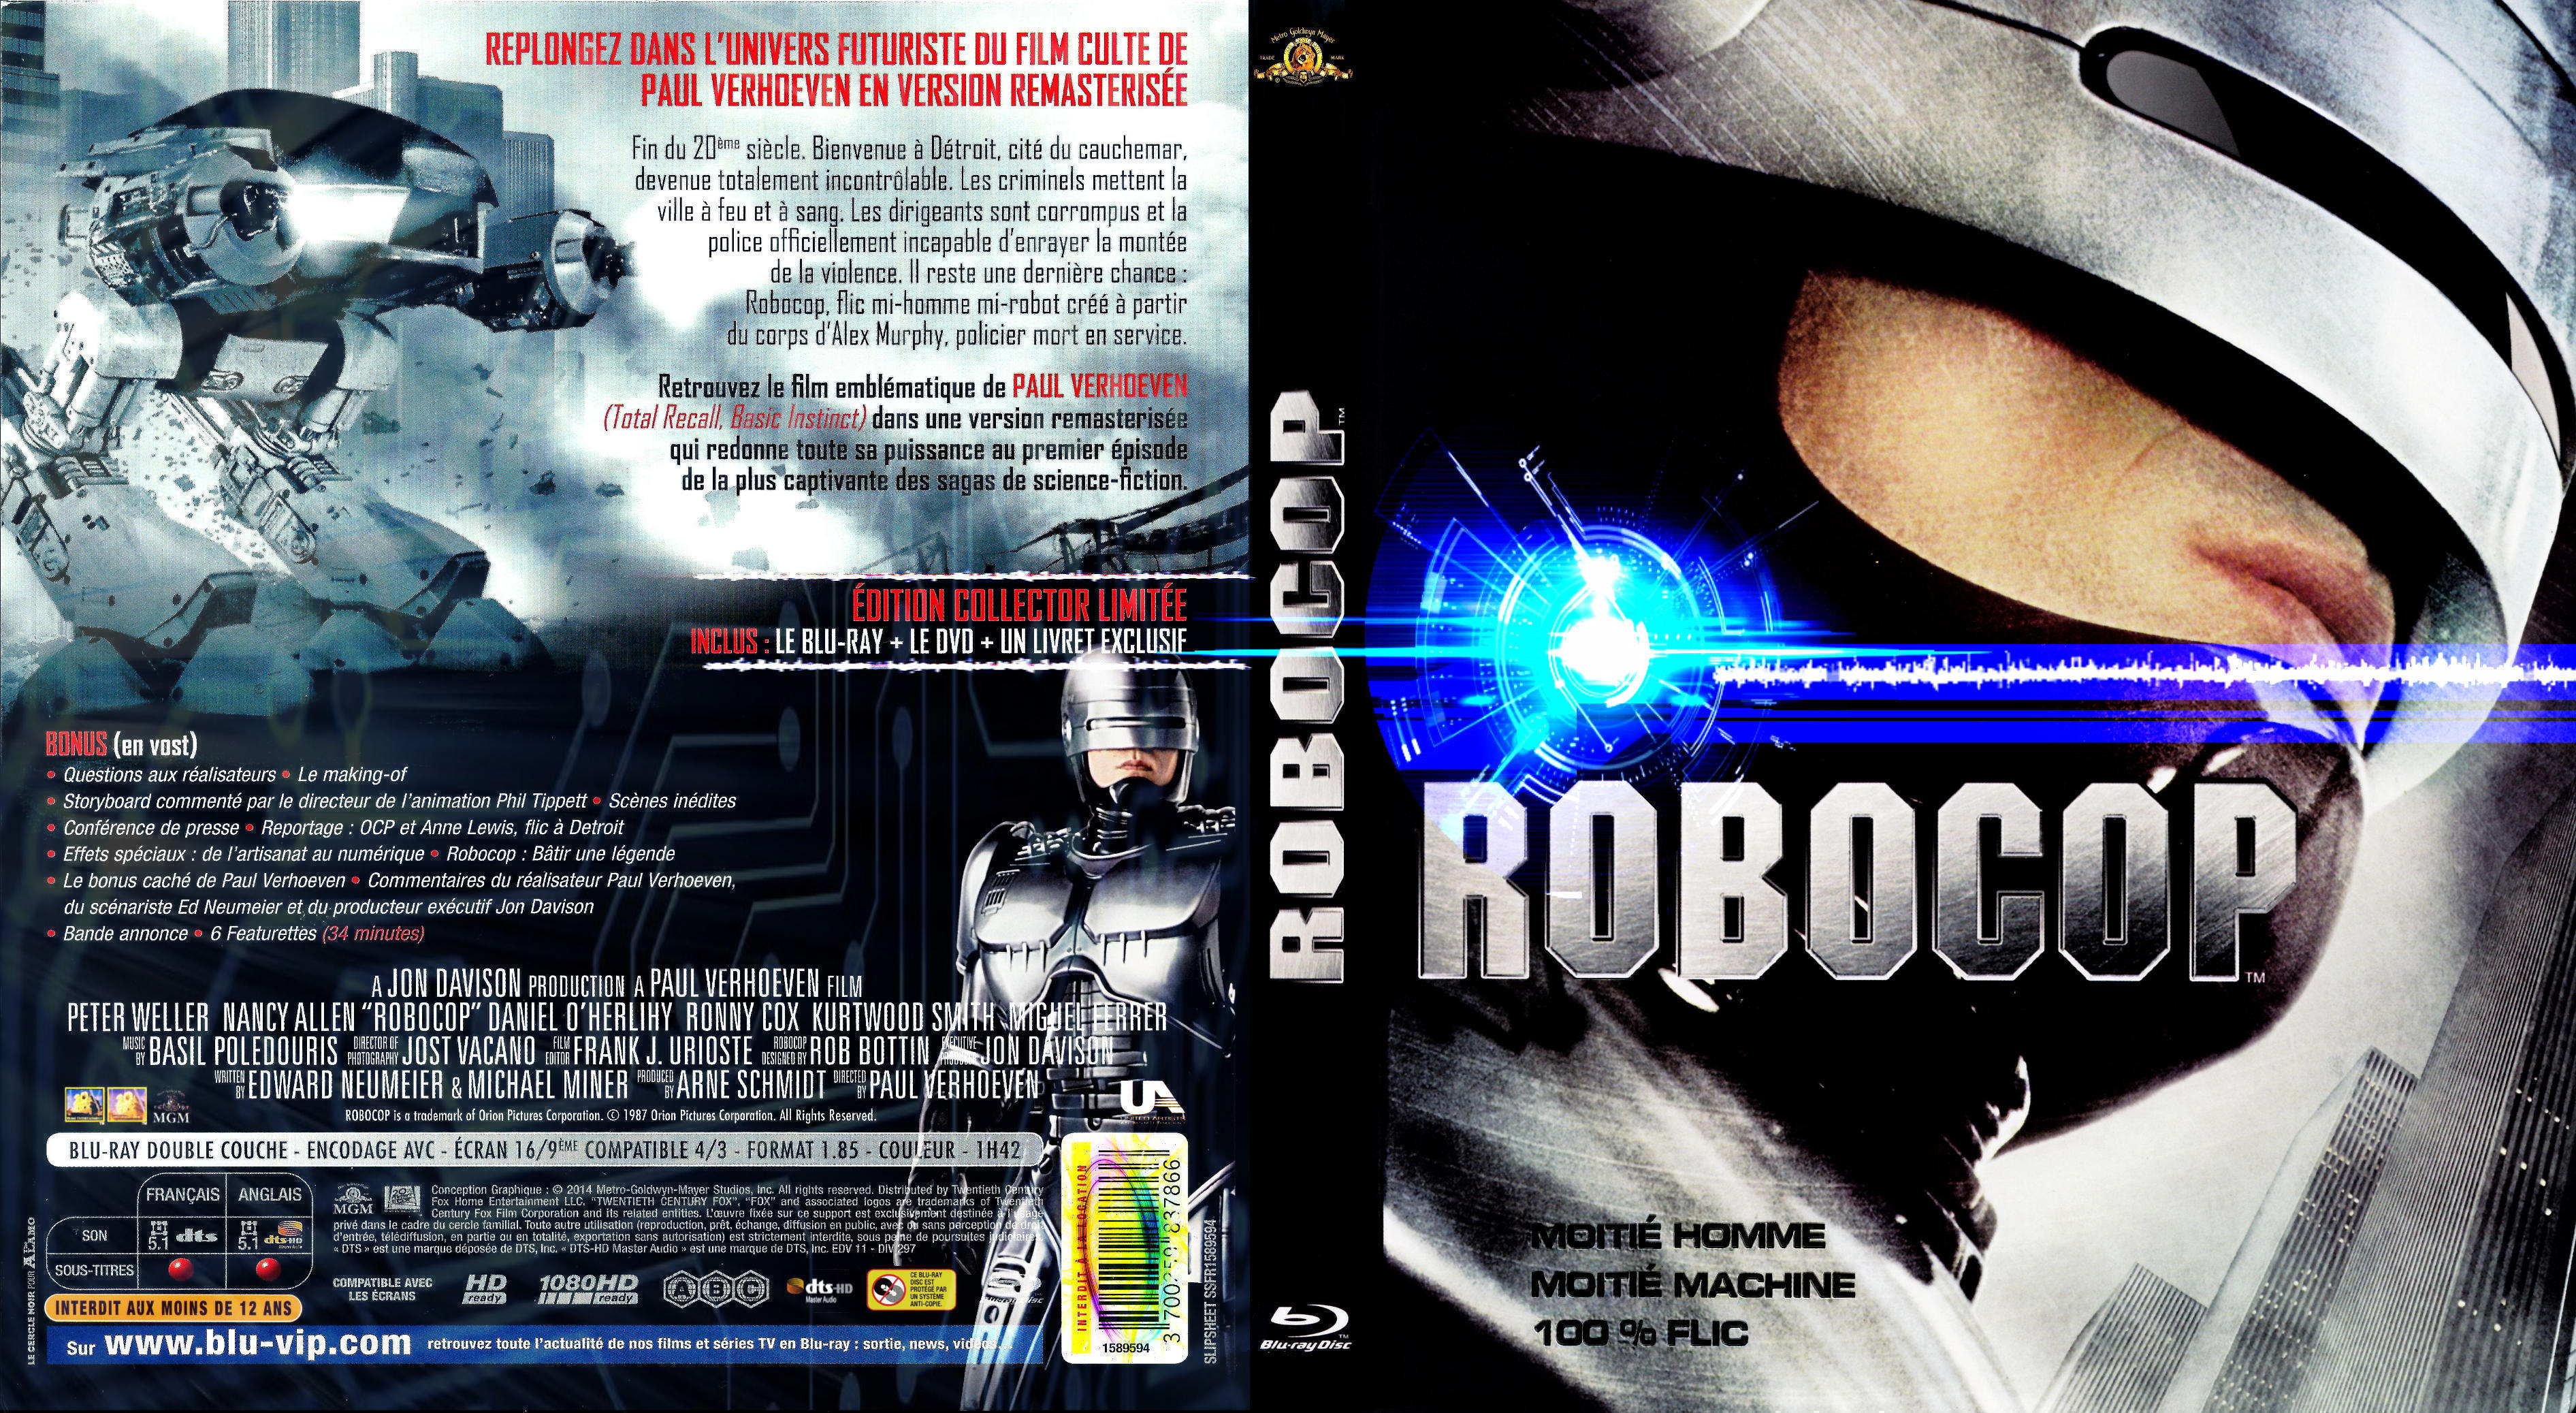 Jaquette DVD Robocop custom (BLU-RAY)